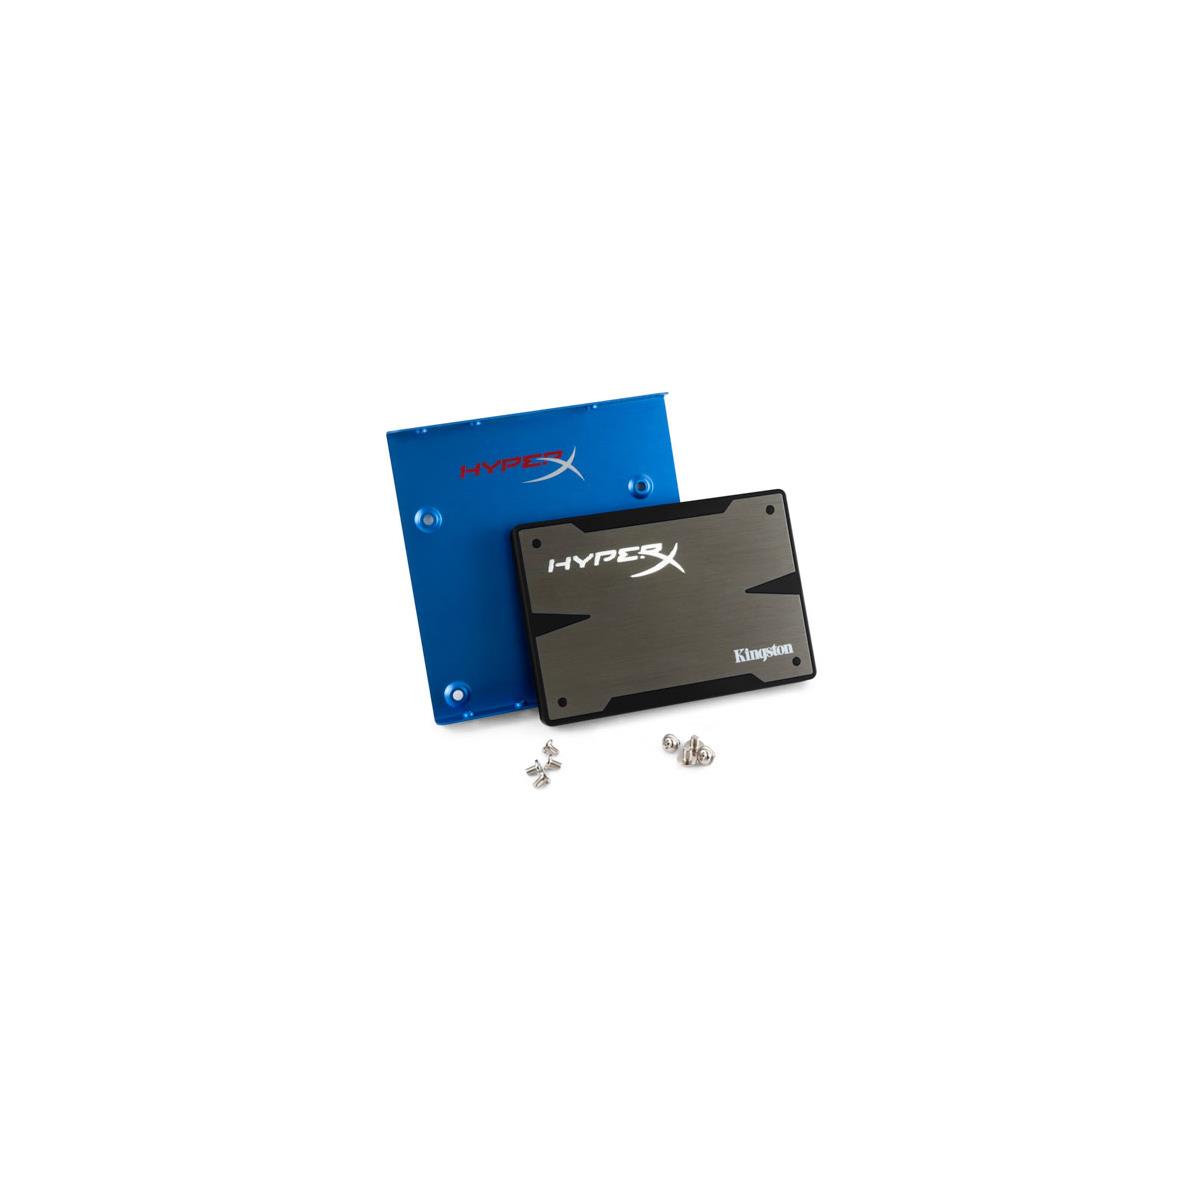 Kingston Technology HyperX 3K 240GB Solid State Drive, Gen 2 -  SH103S3/240G